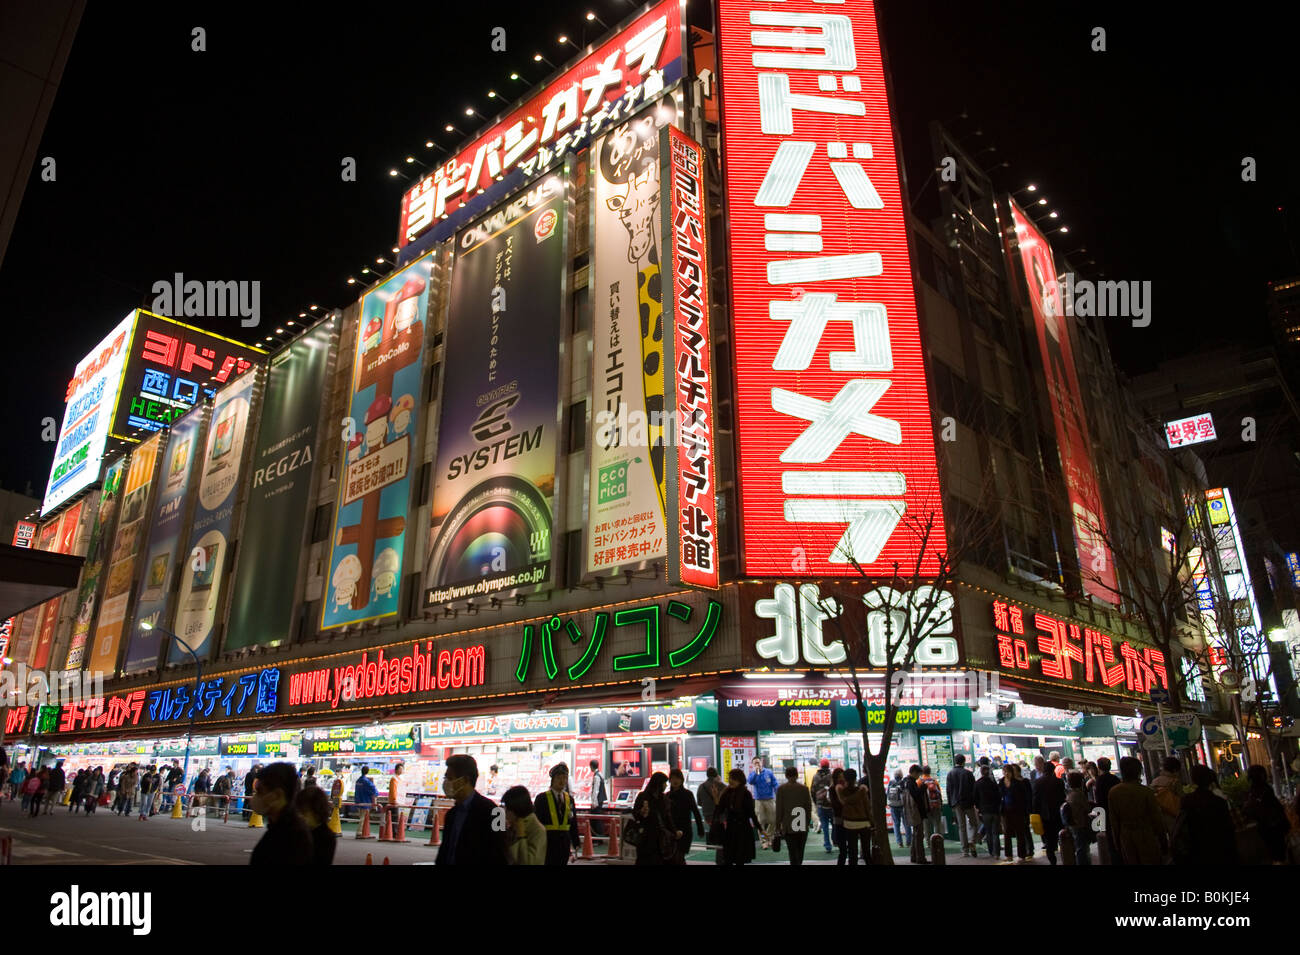 Japan, Tokyo. The famous Yodobashi Camera store at night Stock Photo